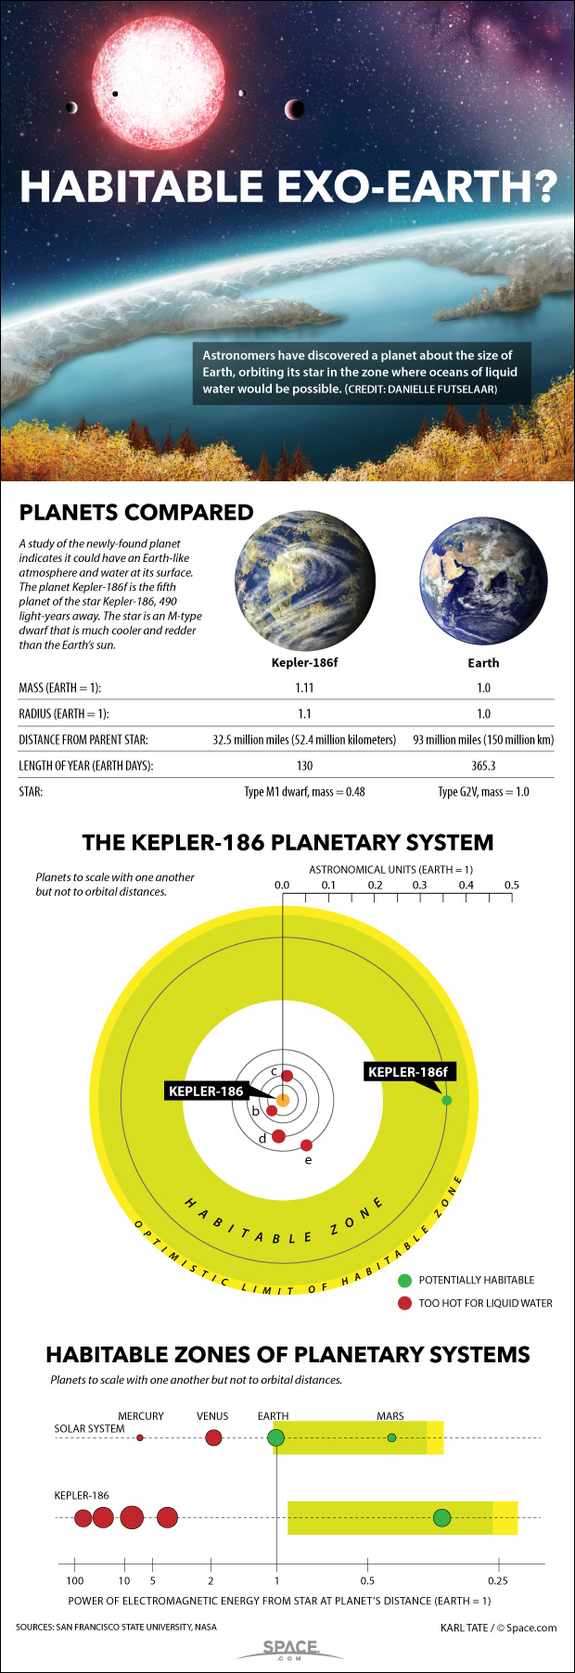 exoearth-habitable-rocky-earth-kepler-18